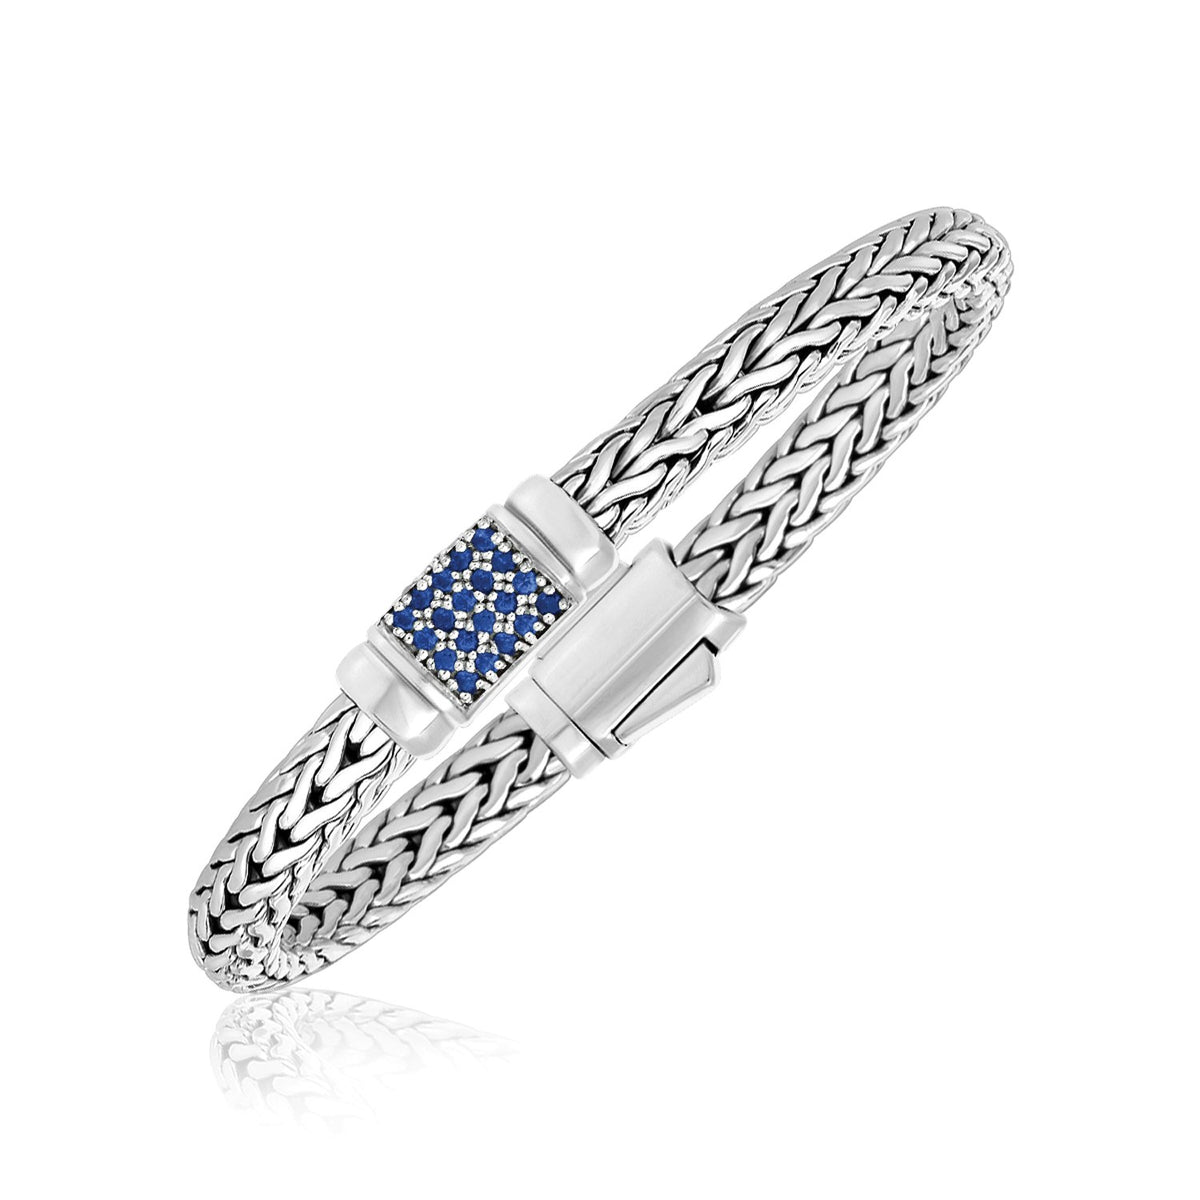 Weave Motif Bracelet with Blue Sapphire Embellishments - Sterling Silver 7.00mm